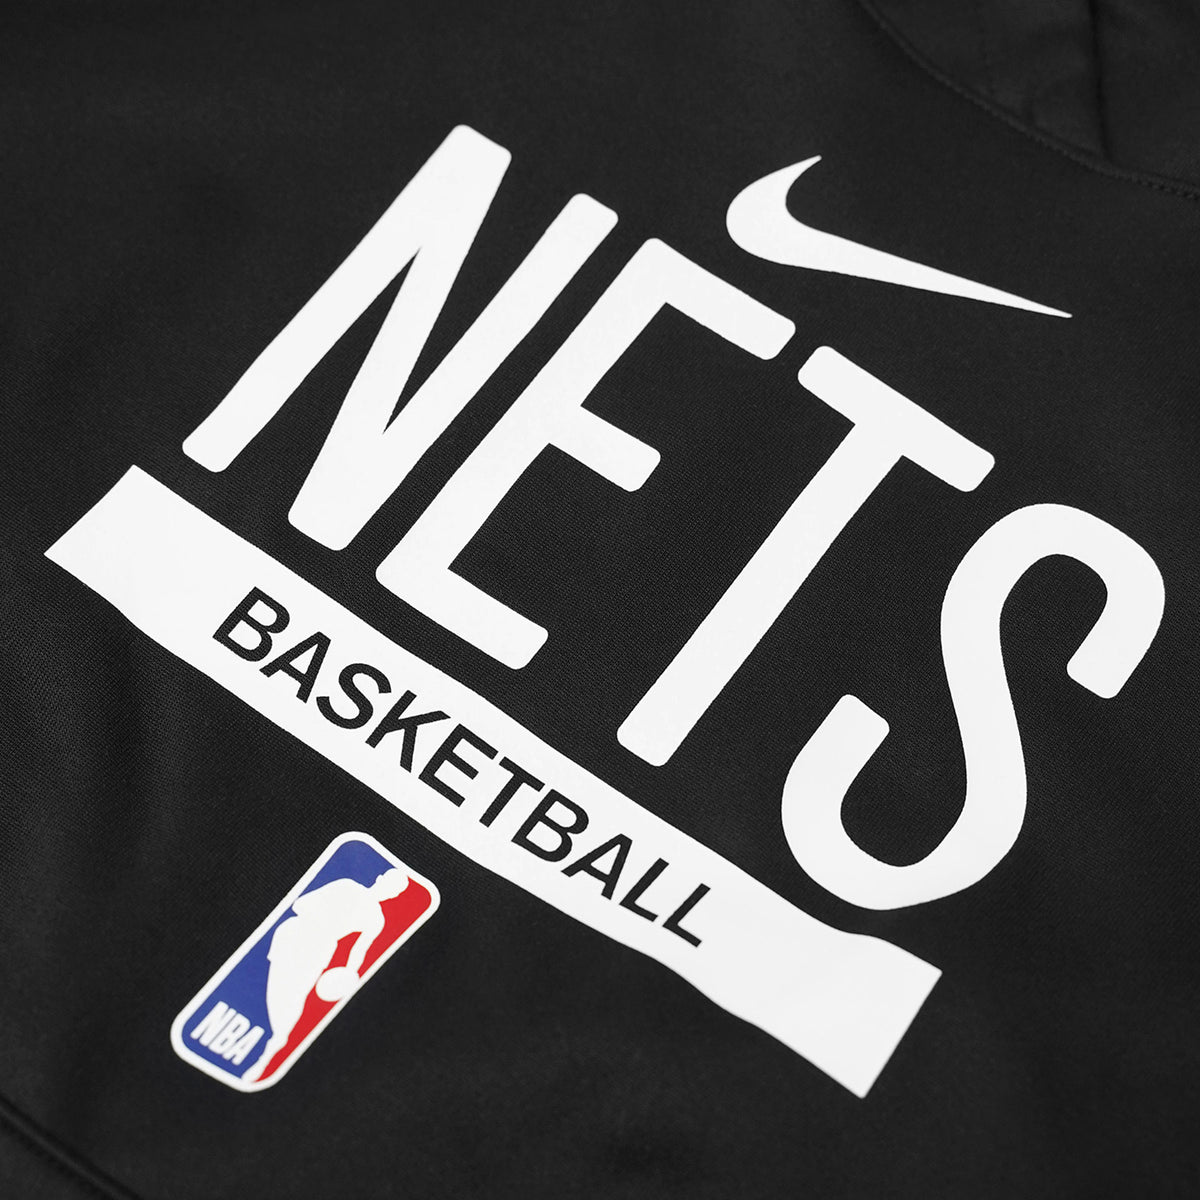 Brooklyn Nets Spotlight Dri-FIT NBA Pullover Hoodie - Black - Throwback